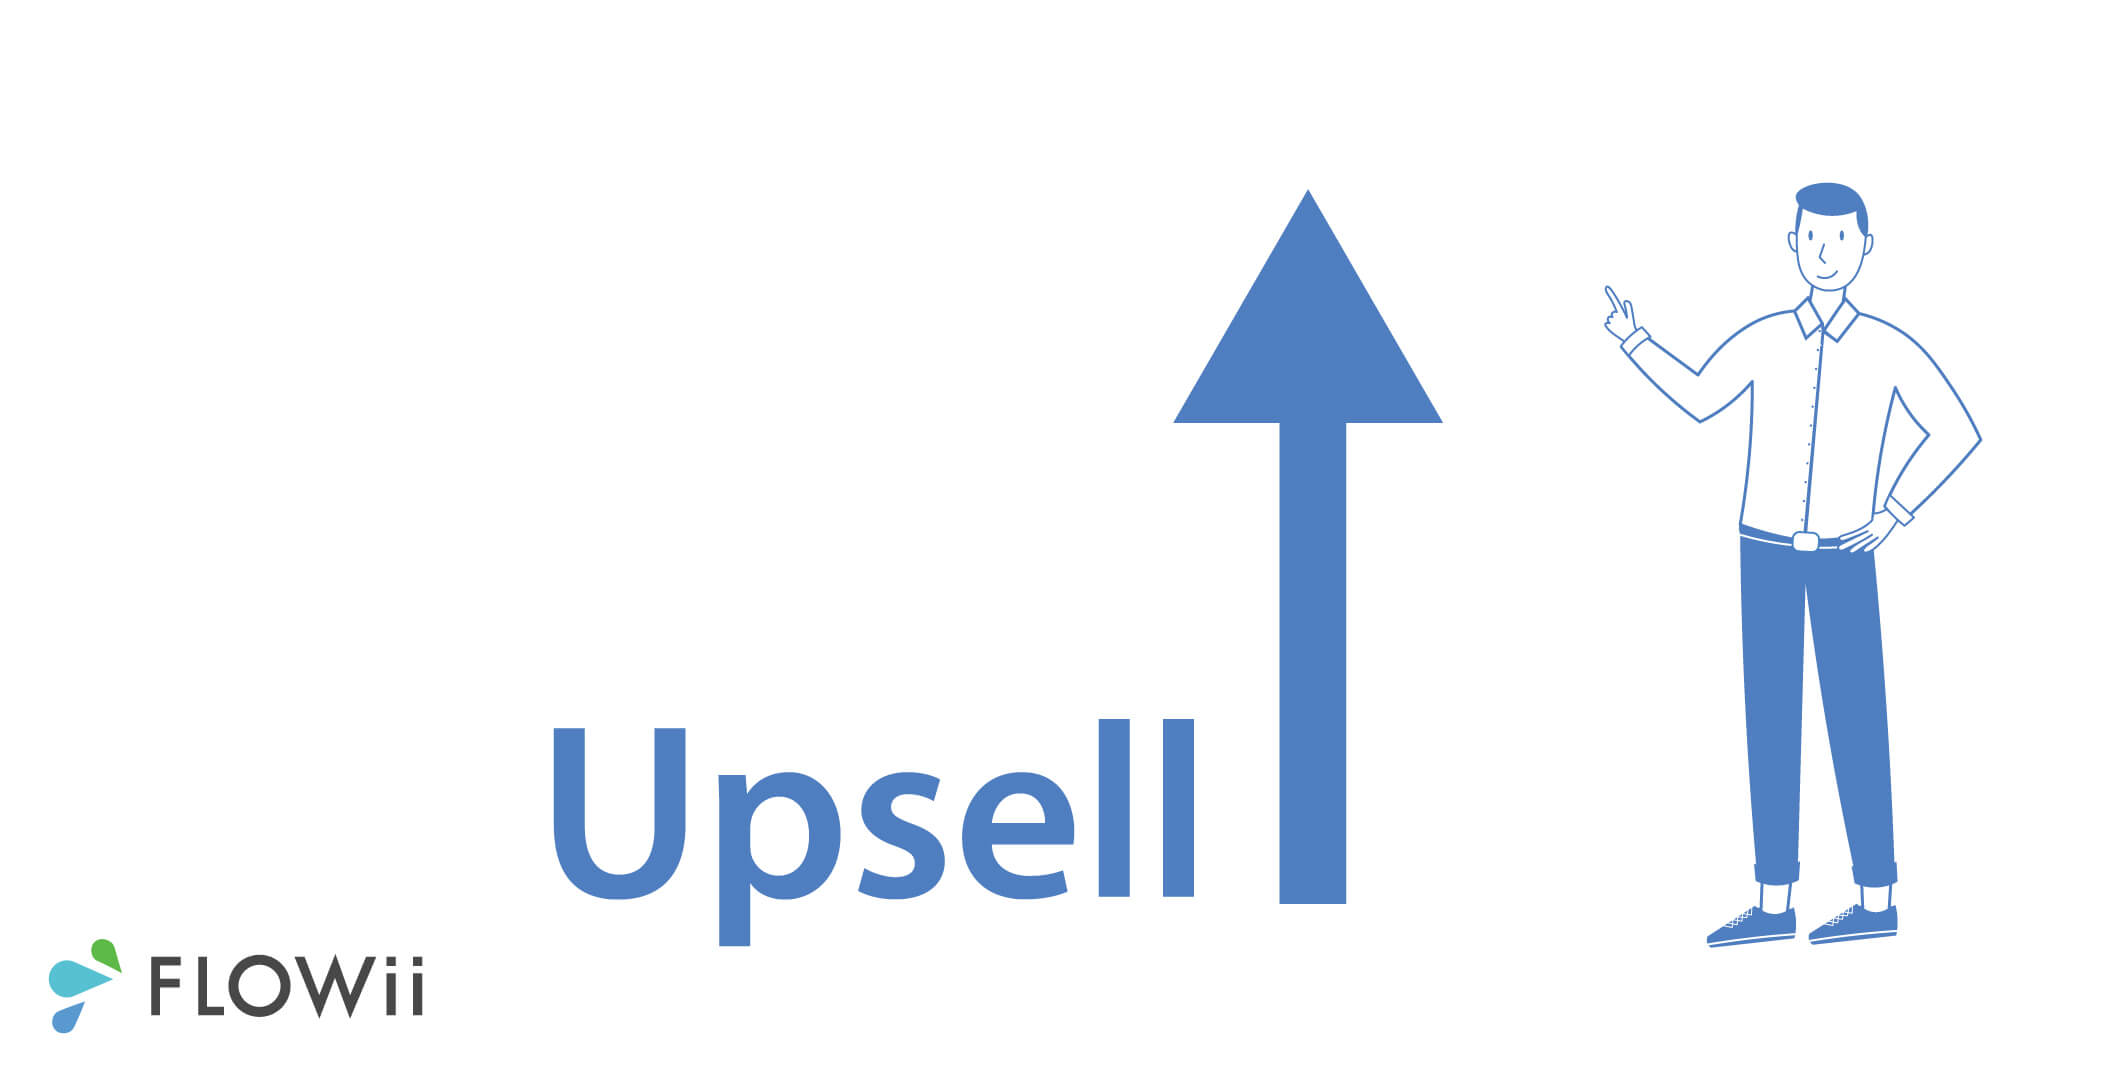 Upsell